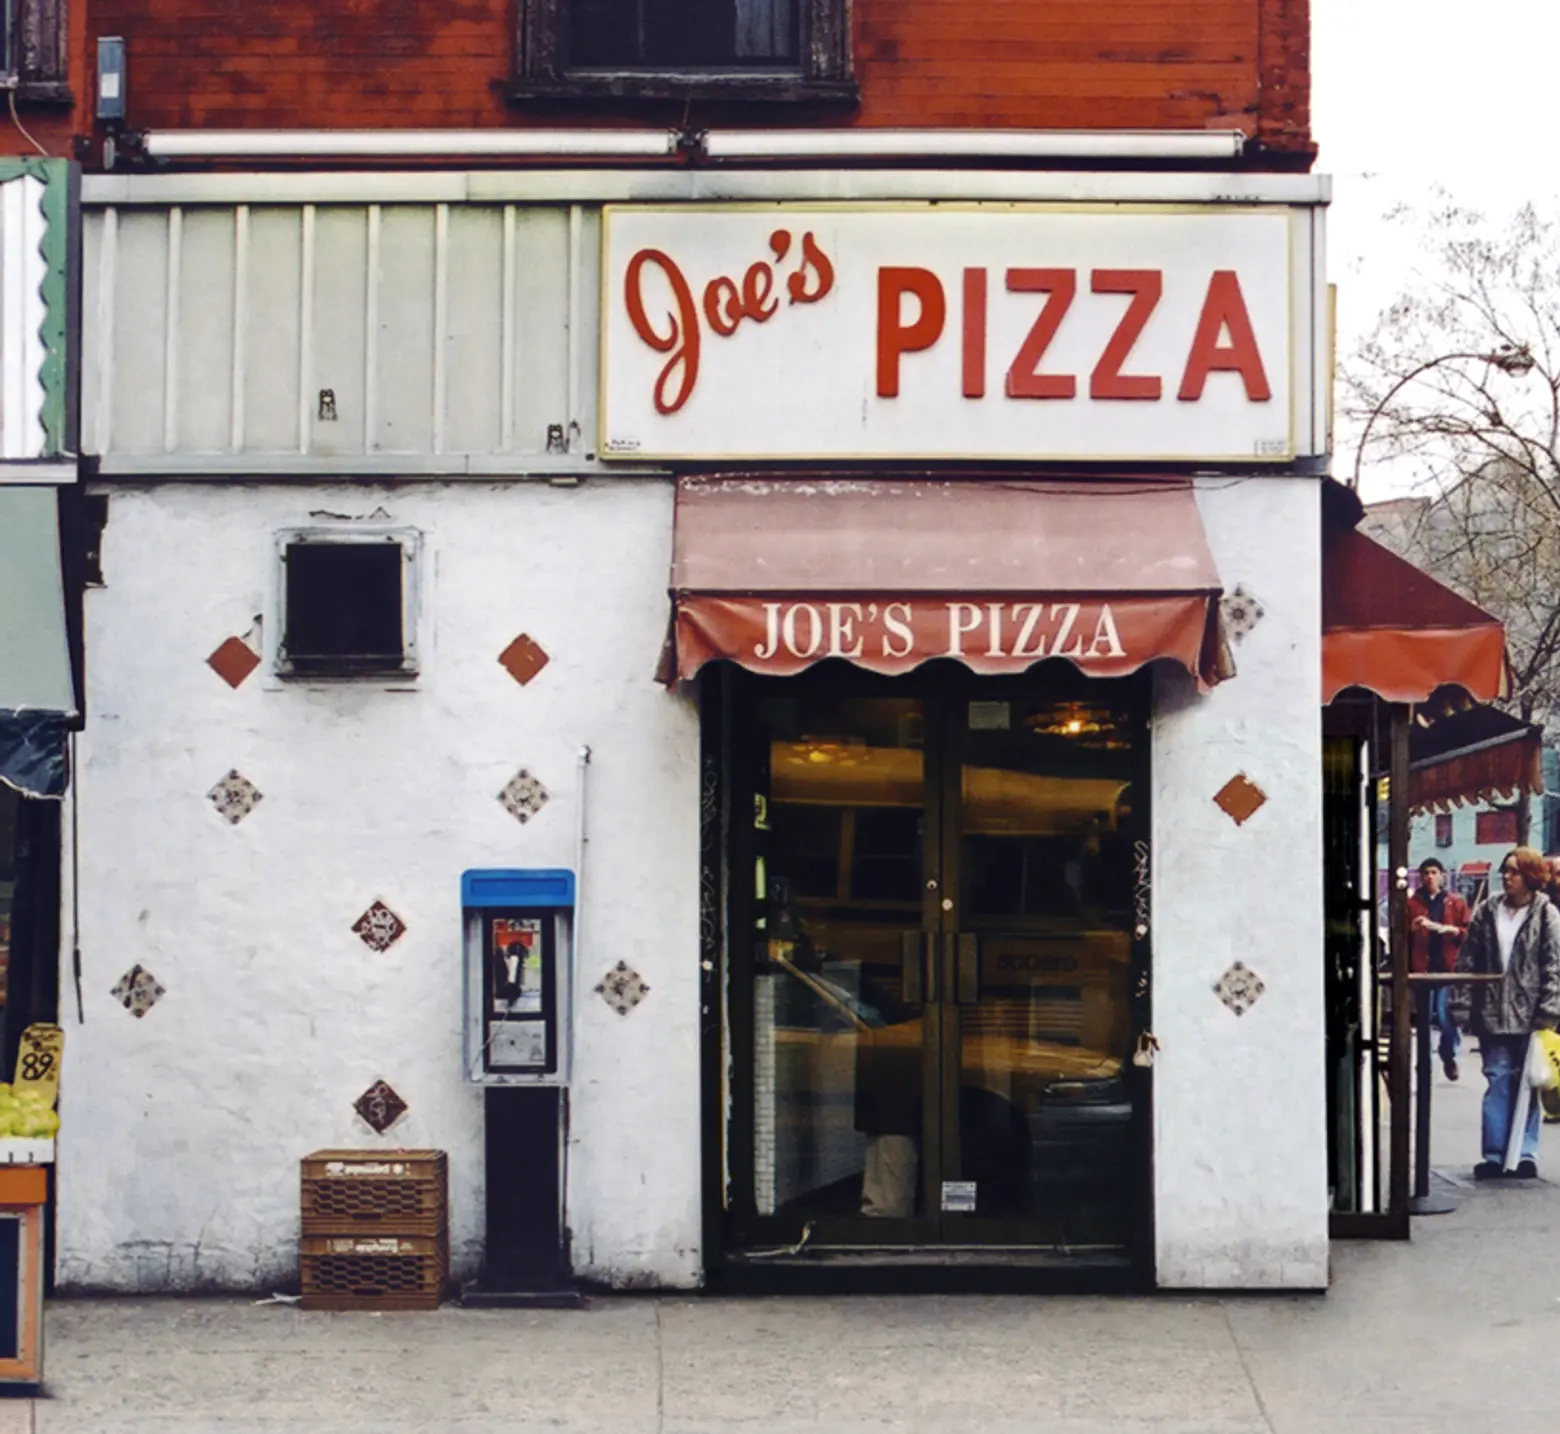 JOE’S PIZZA, nyc signage